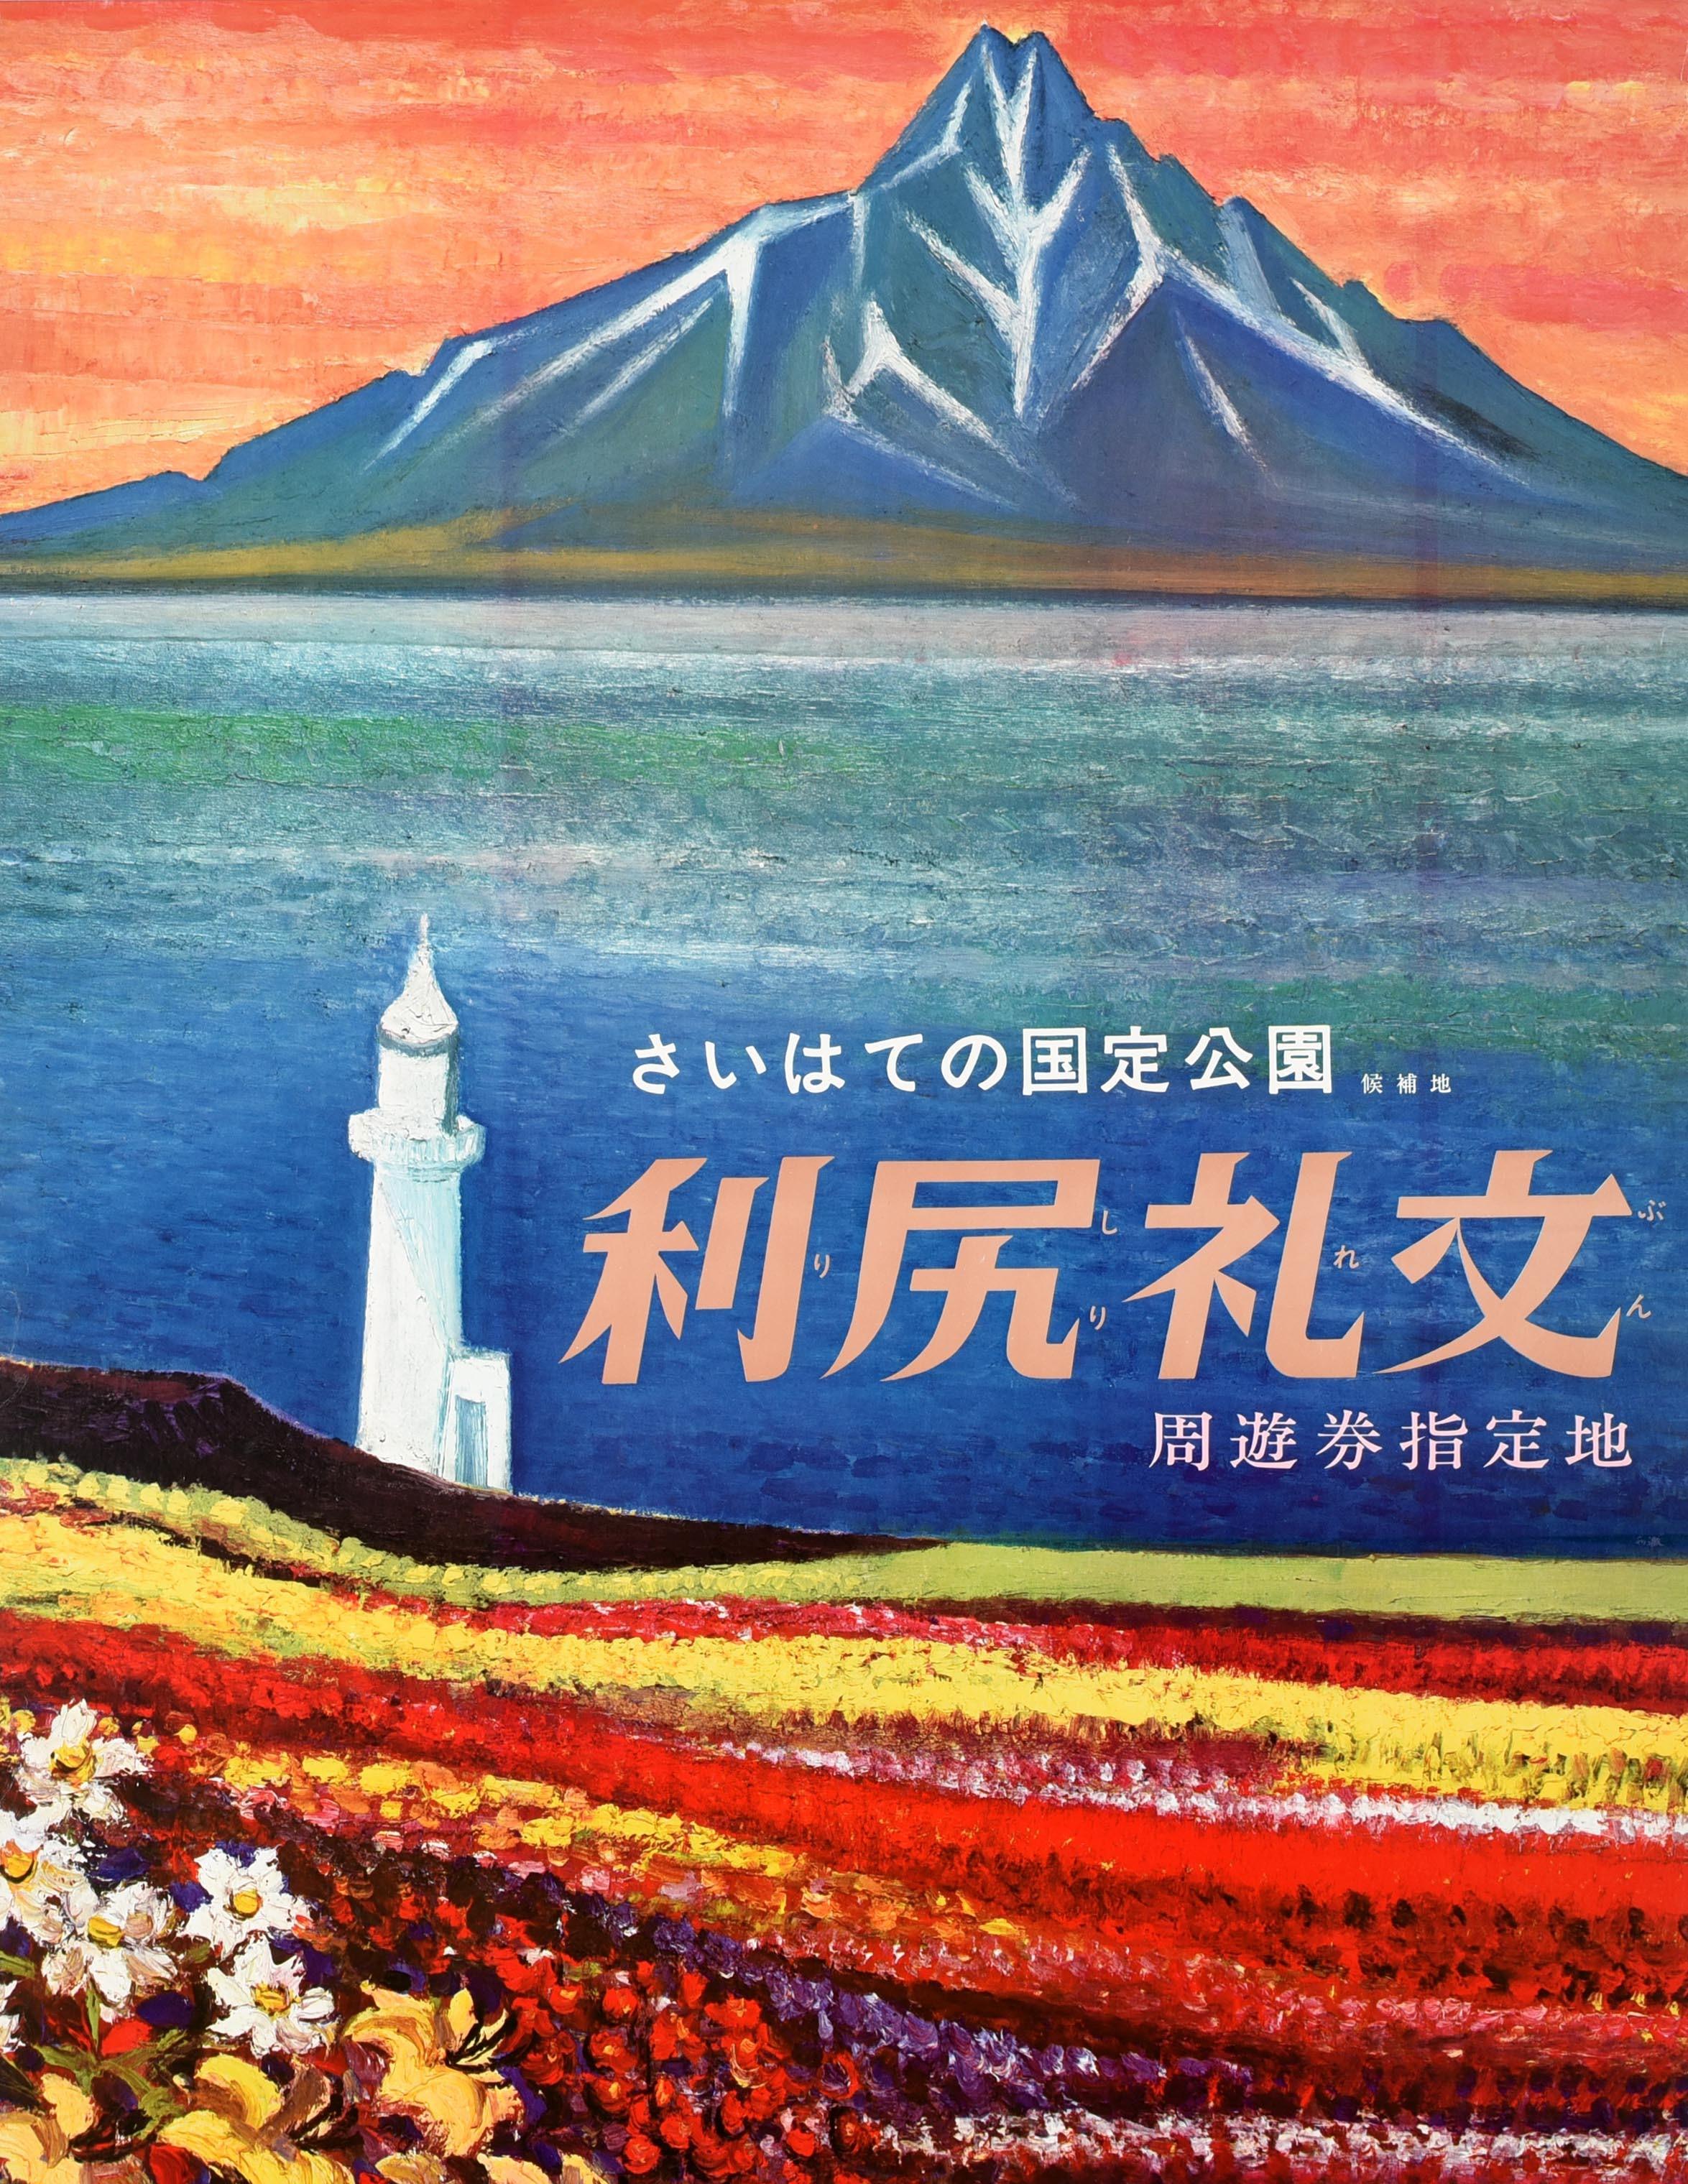 Japanese Original Vintage Japan Travel Poster Rishiri Island Hokkaido Coast National Park For Sale